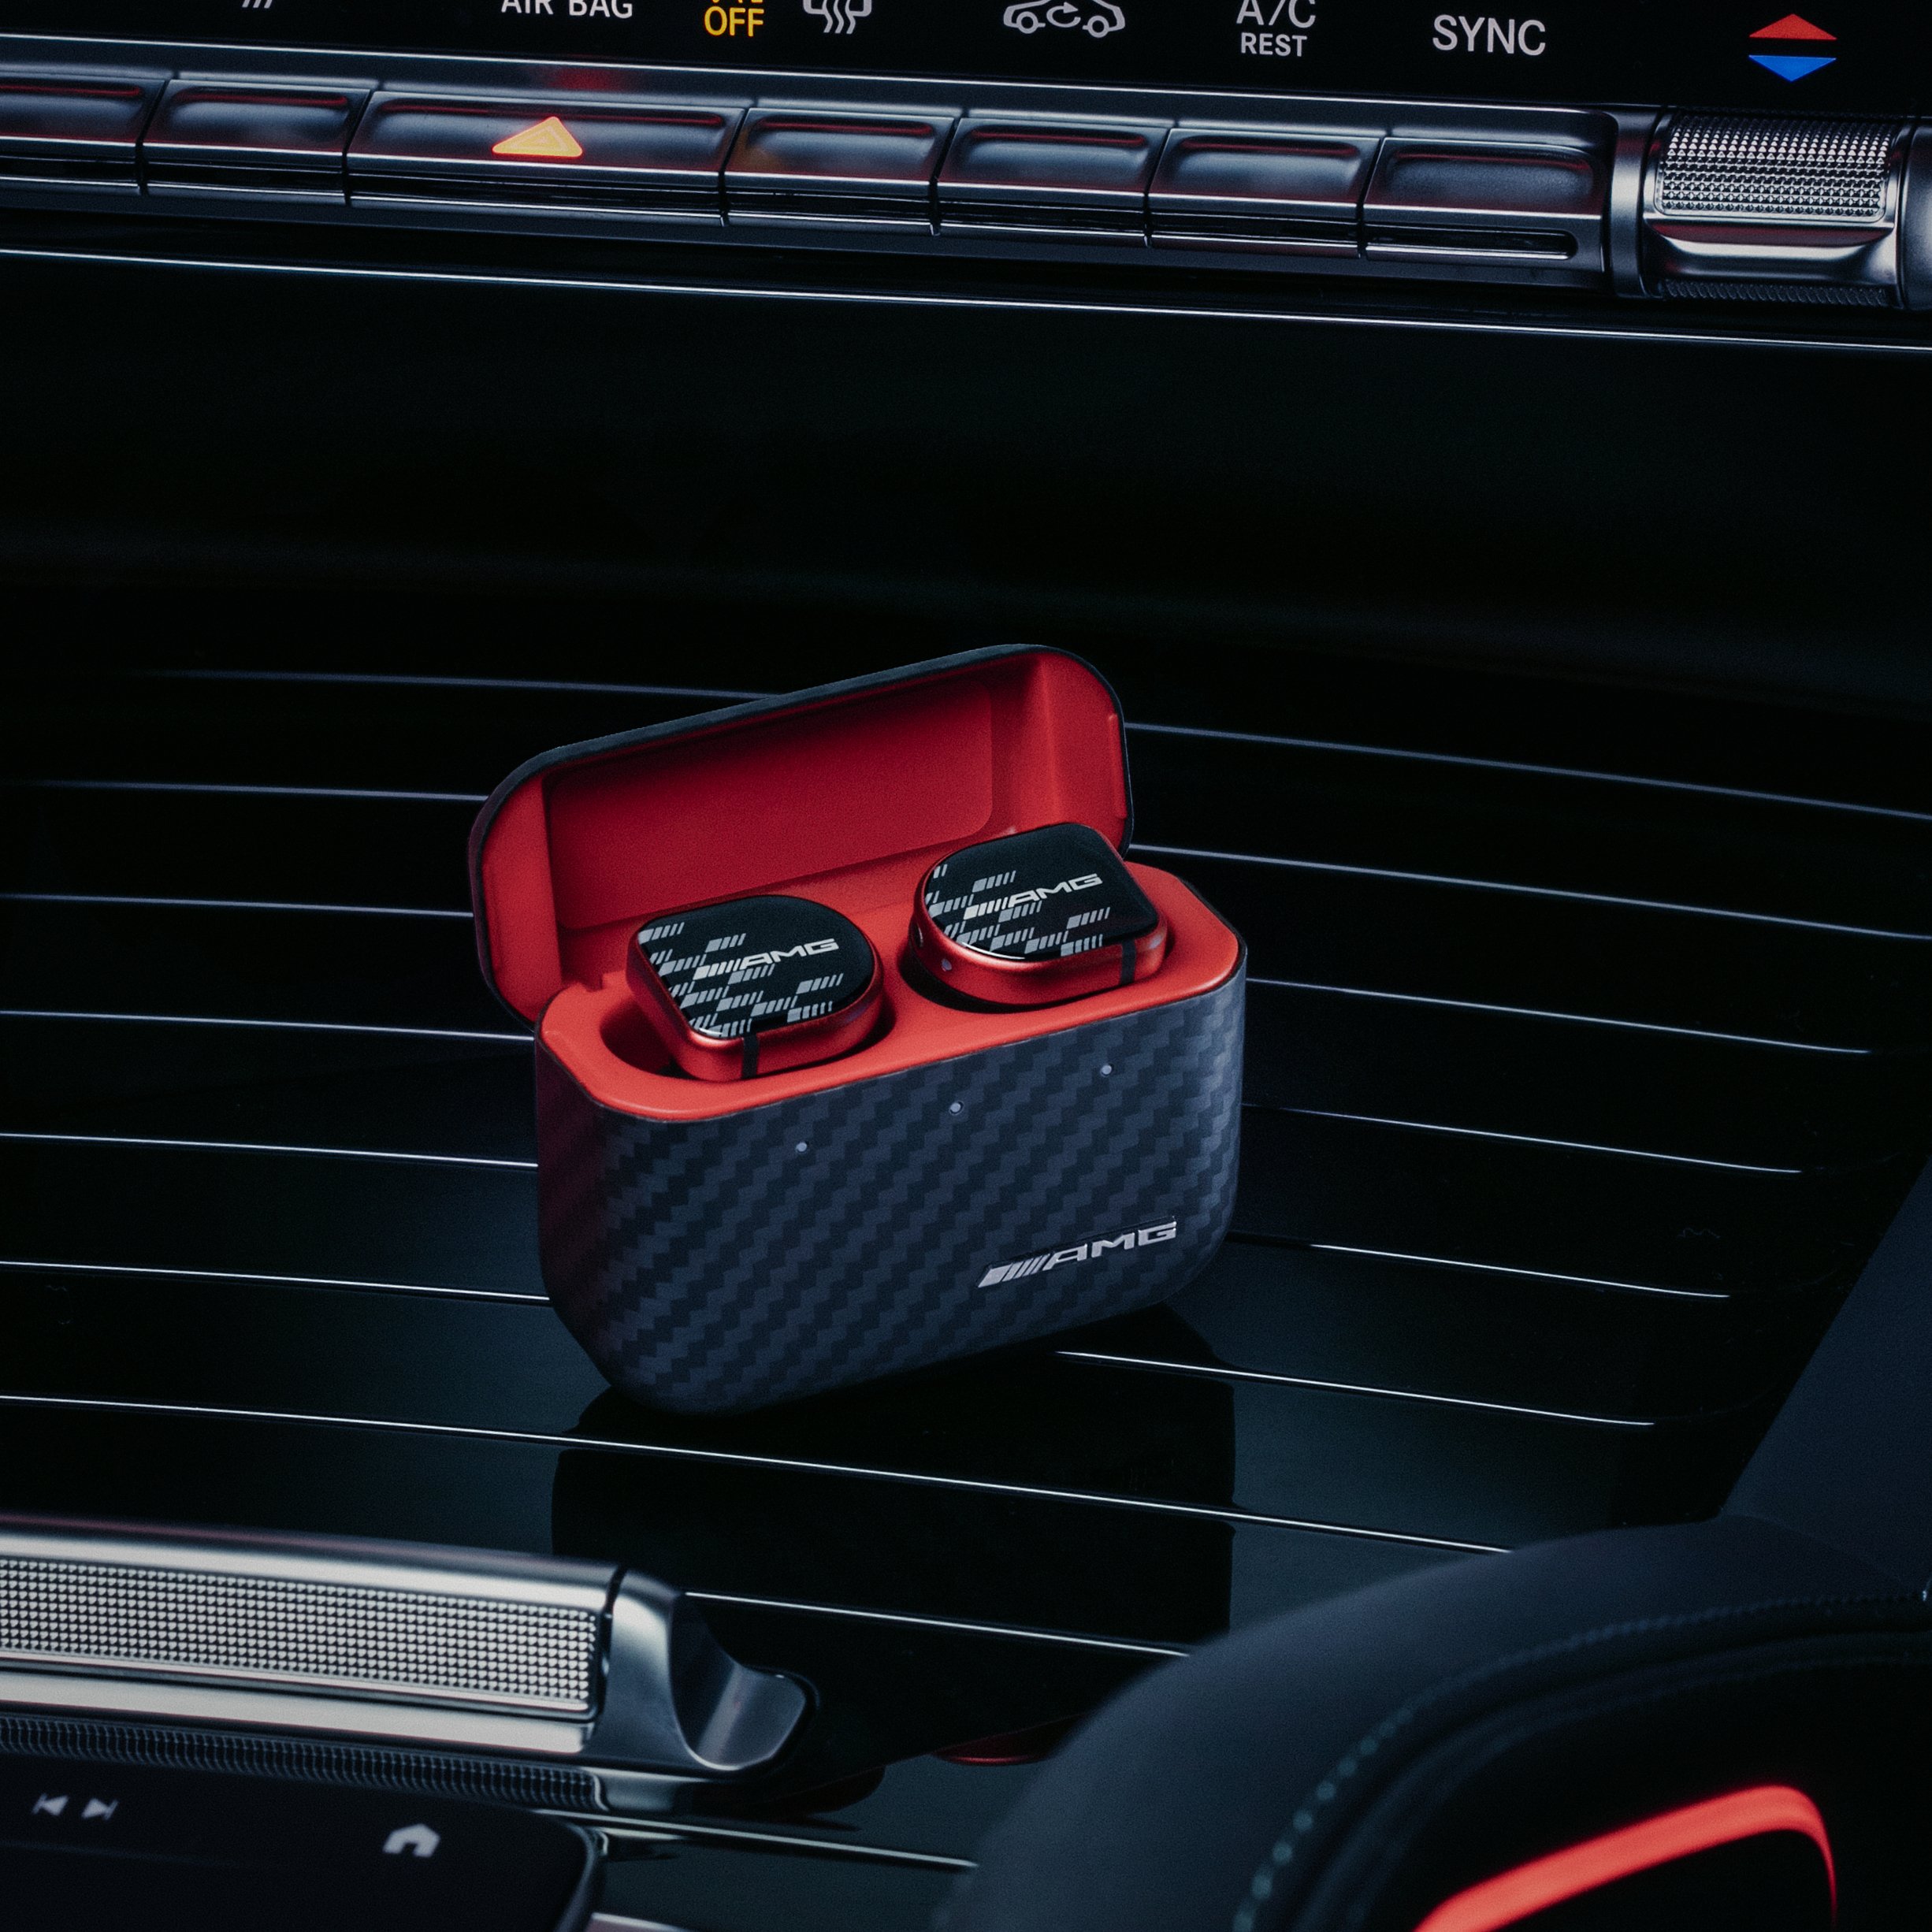 The Master & Dynamic for Mercedes-AMG MW08 Sport True Wireless Earphones